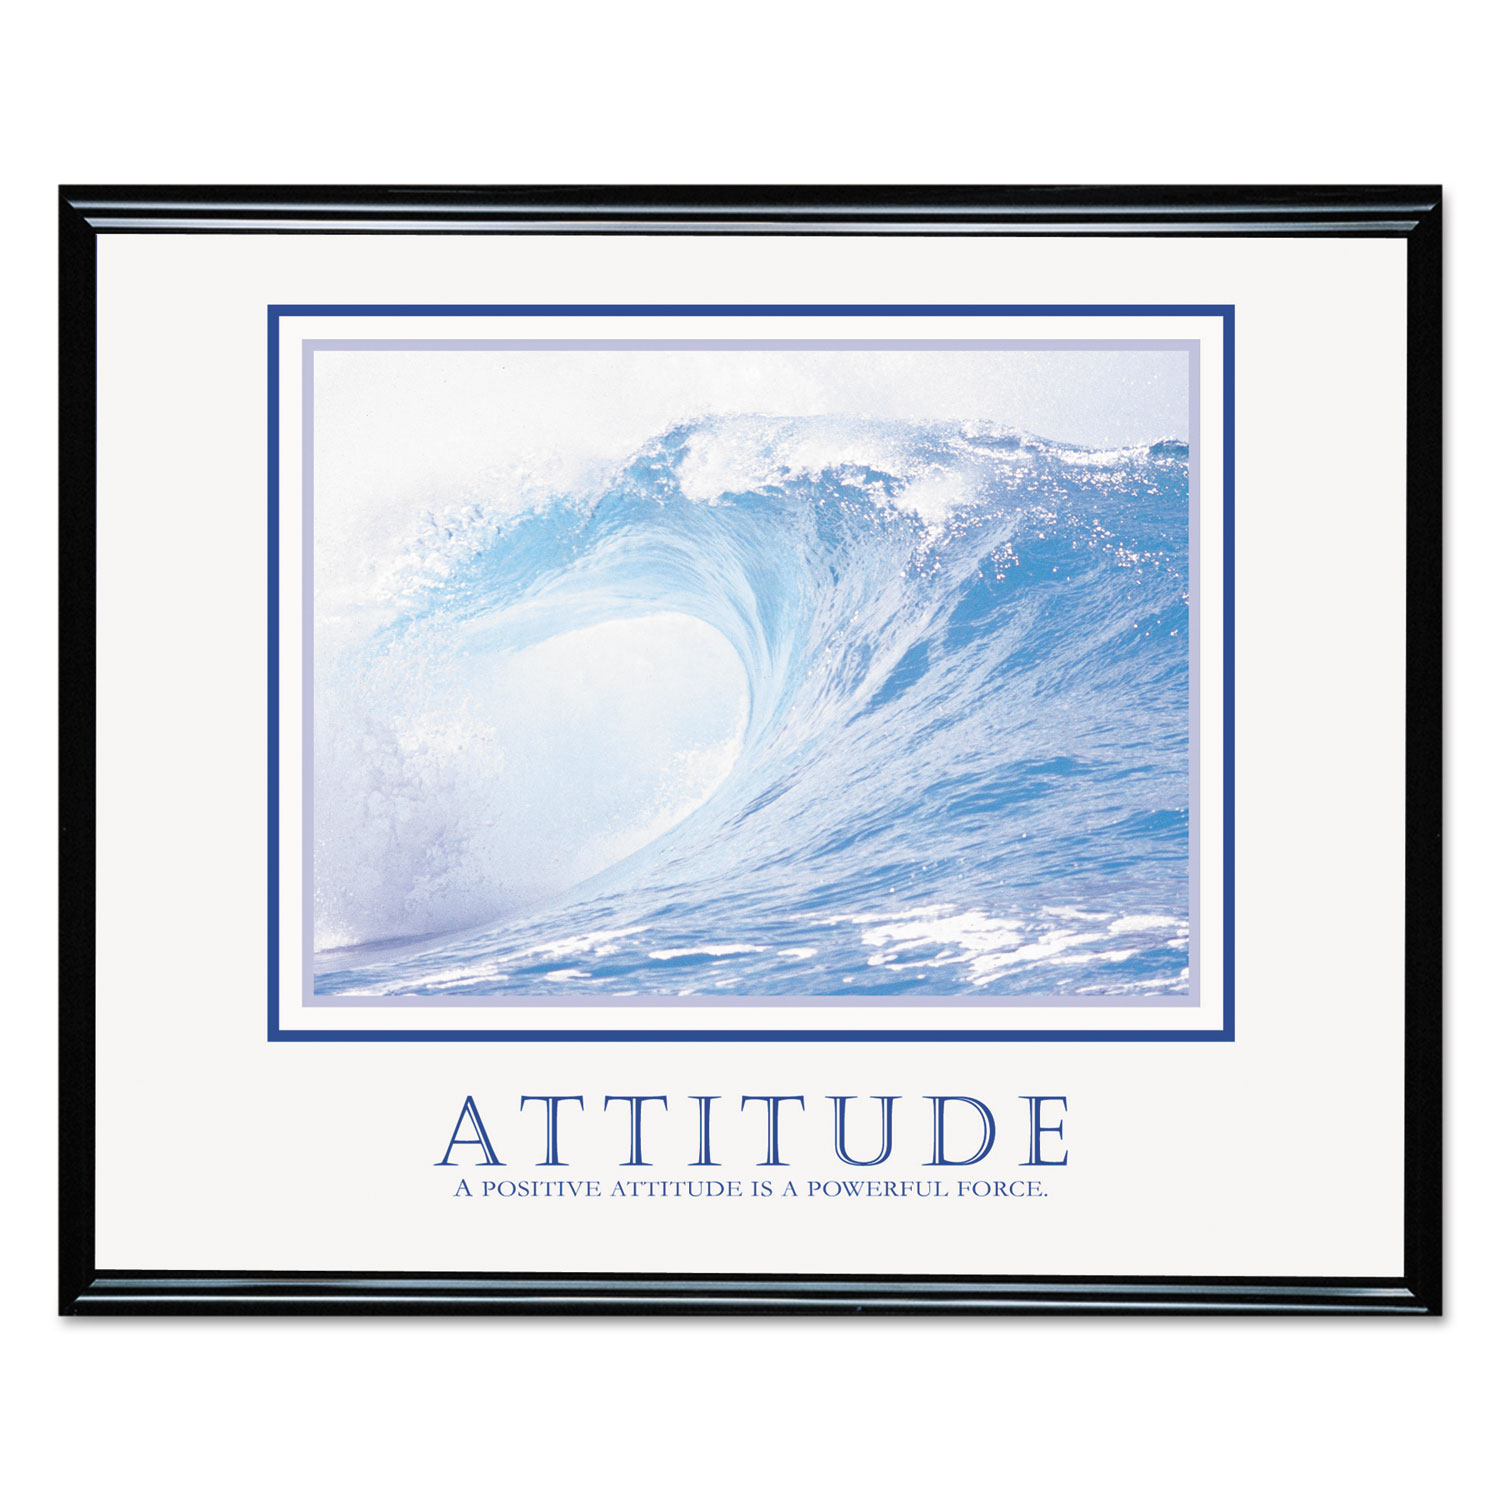 Attitude/Waves Framed Motivational Print, 30w x 24h